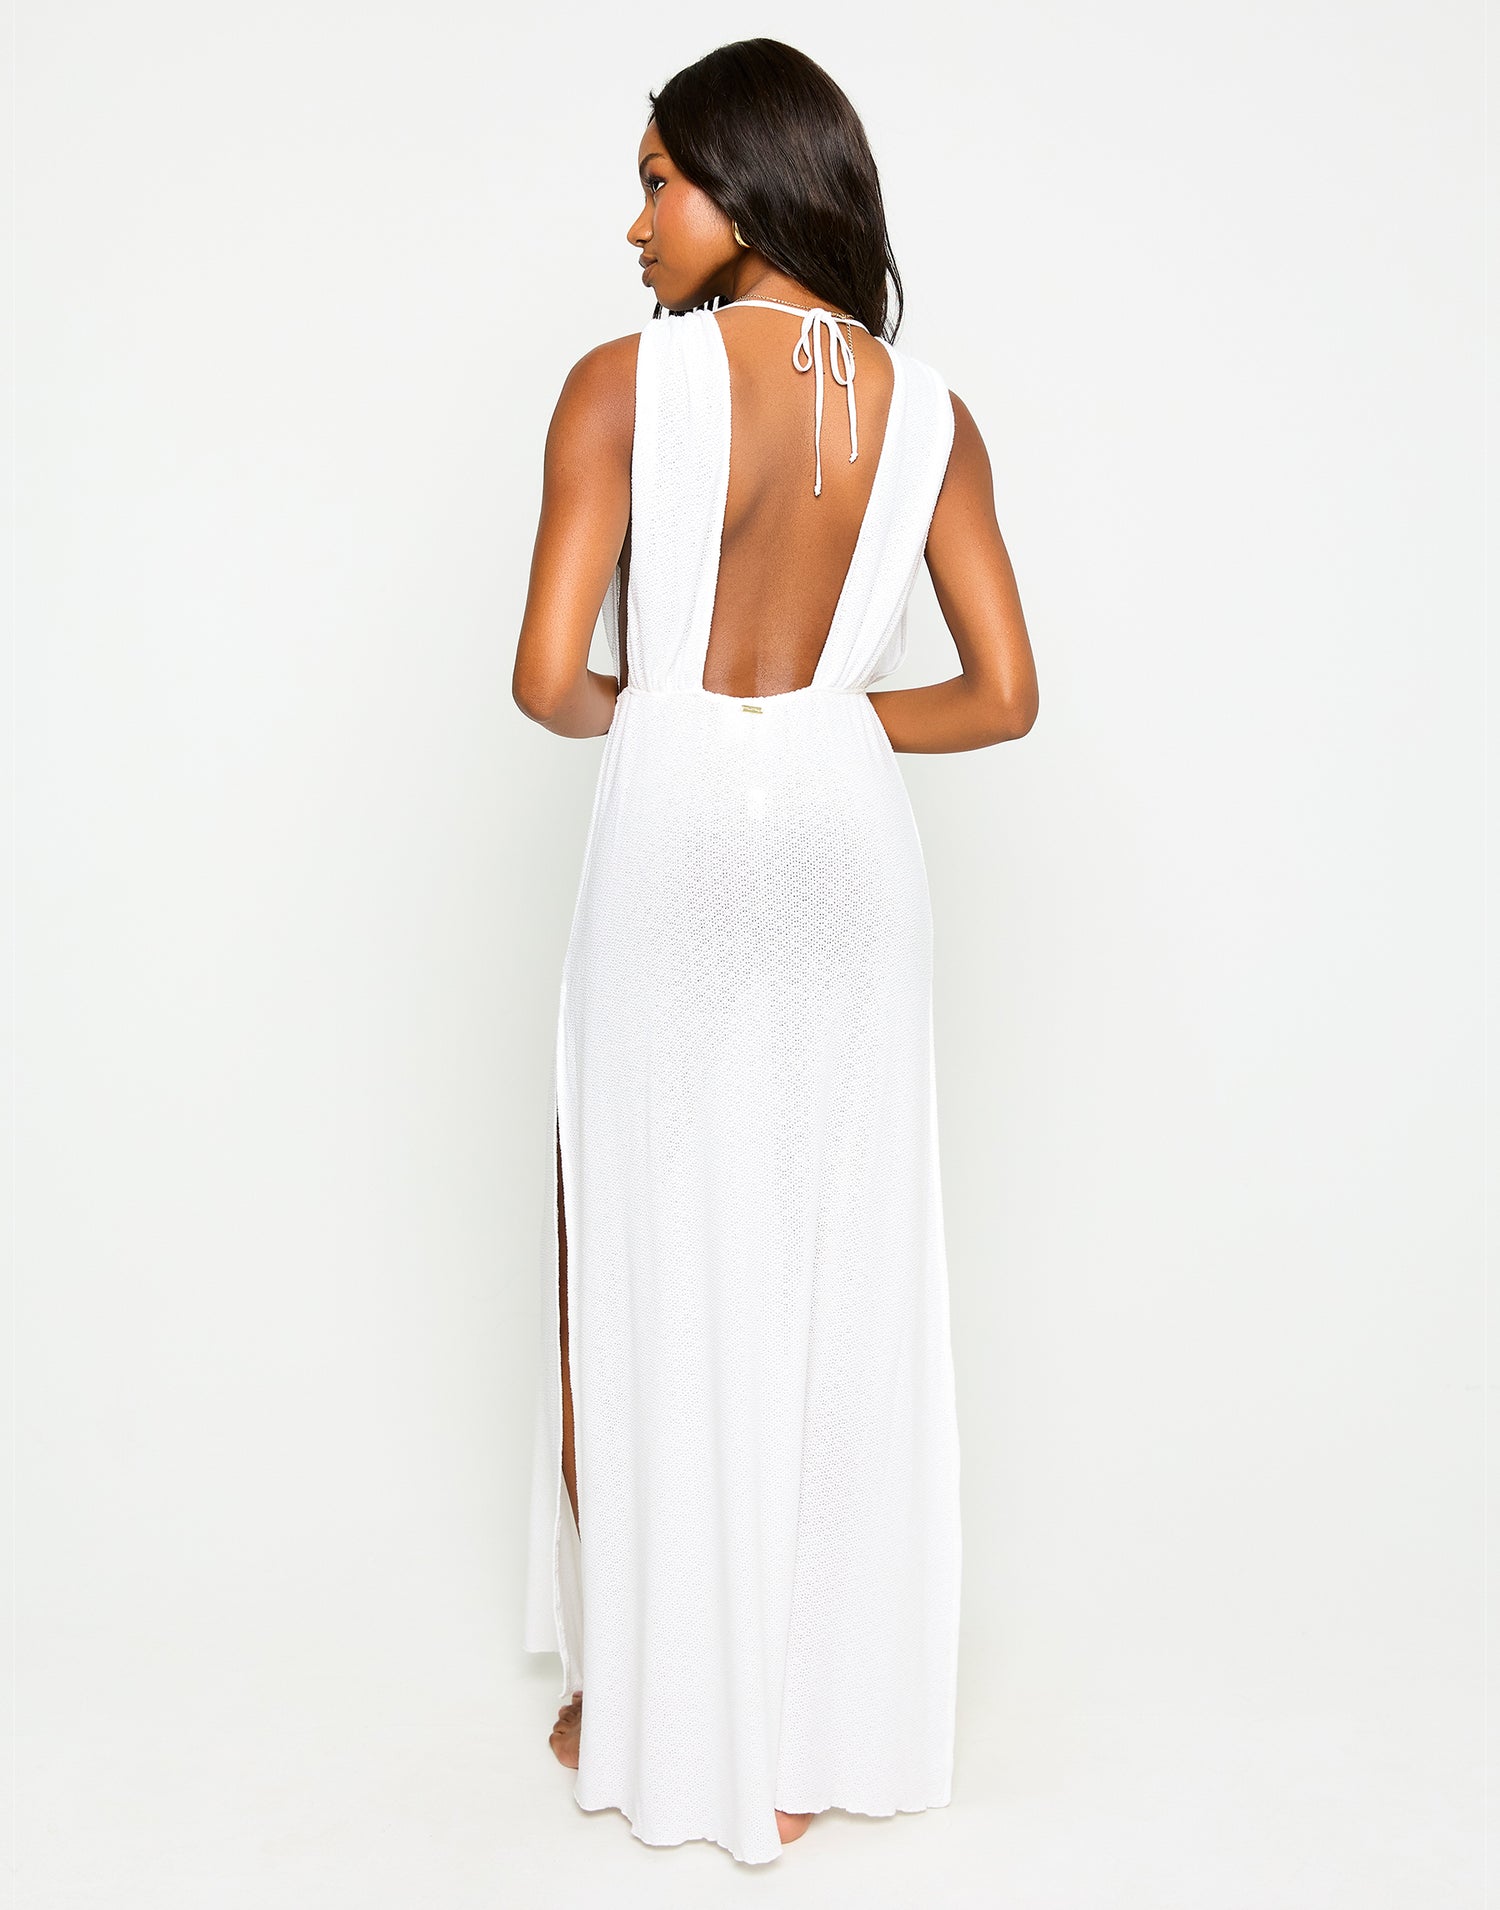 Annika Beach Cover Up Maxi Dress in White - Alternate Back View